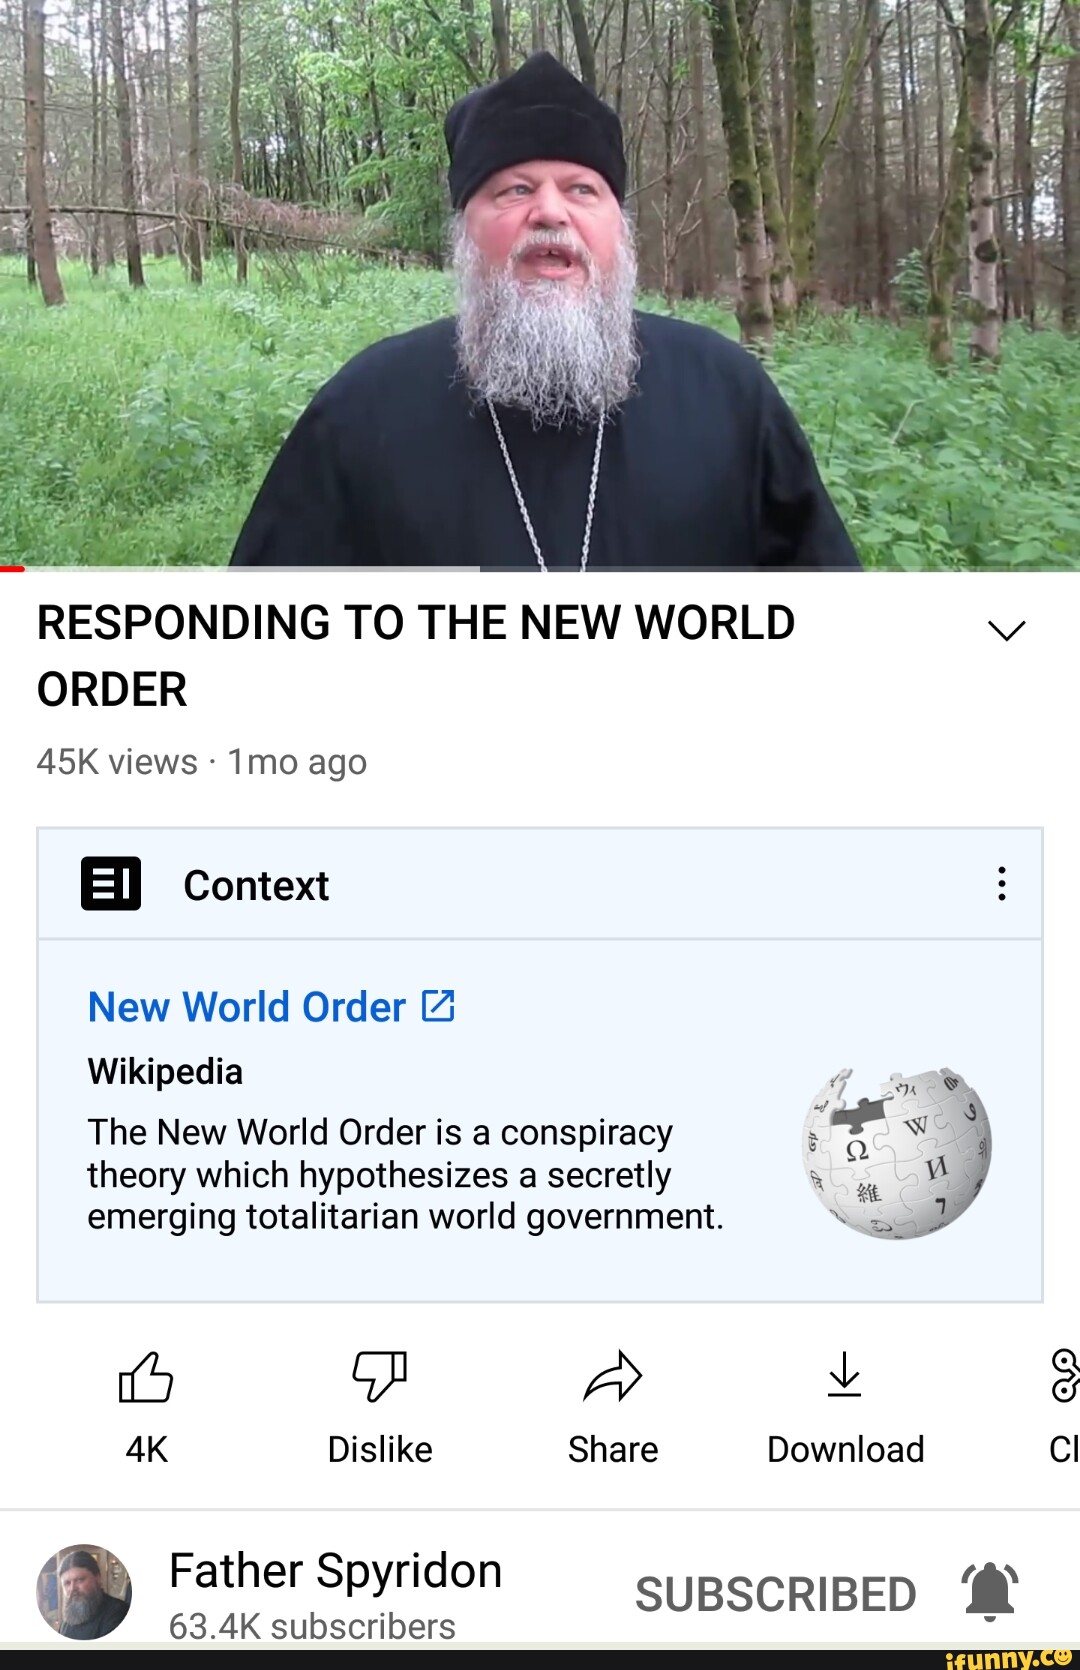 New World Order (conspiracy theory) - Wikipedia